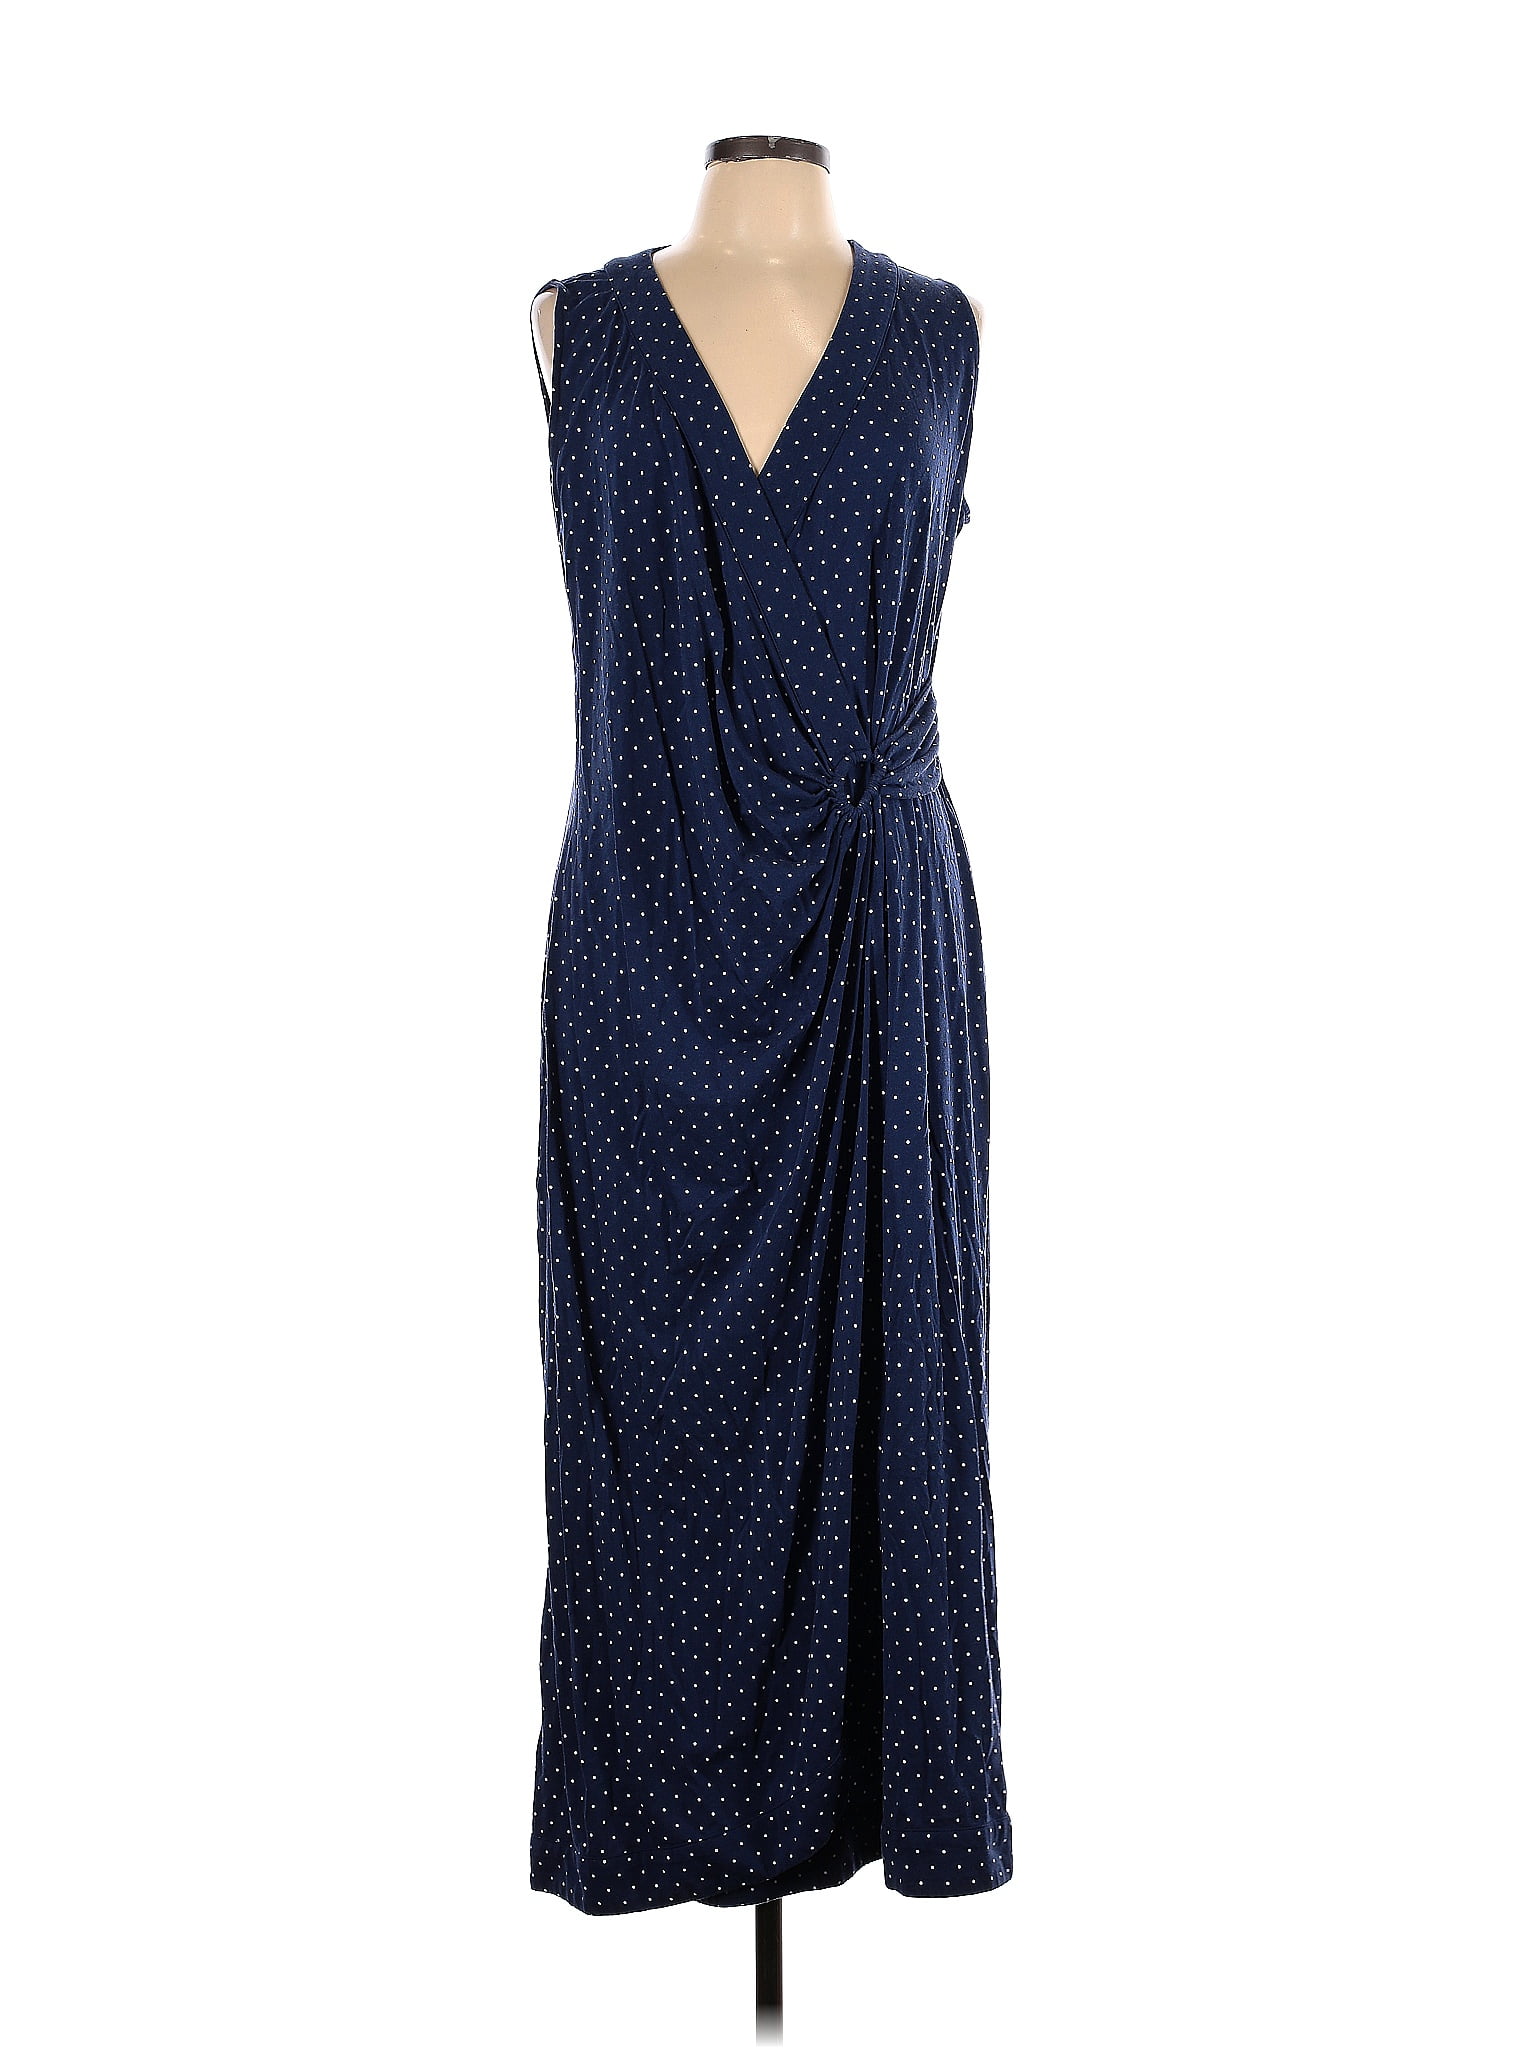 Lands' End Polka Dots Navy Blue Casual Dress Size XL - 66% off | thredUP